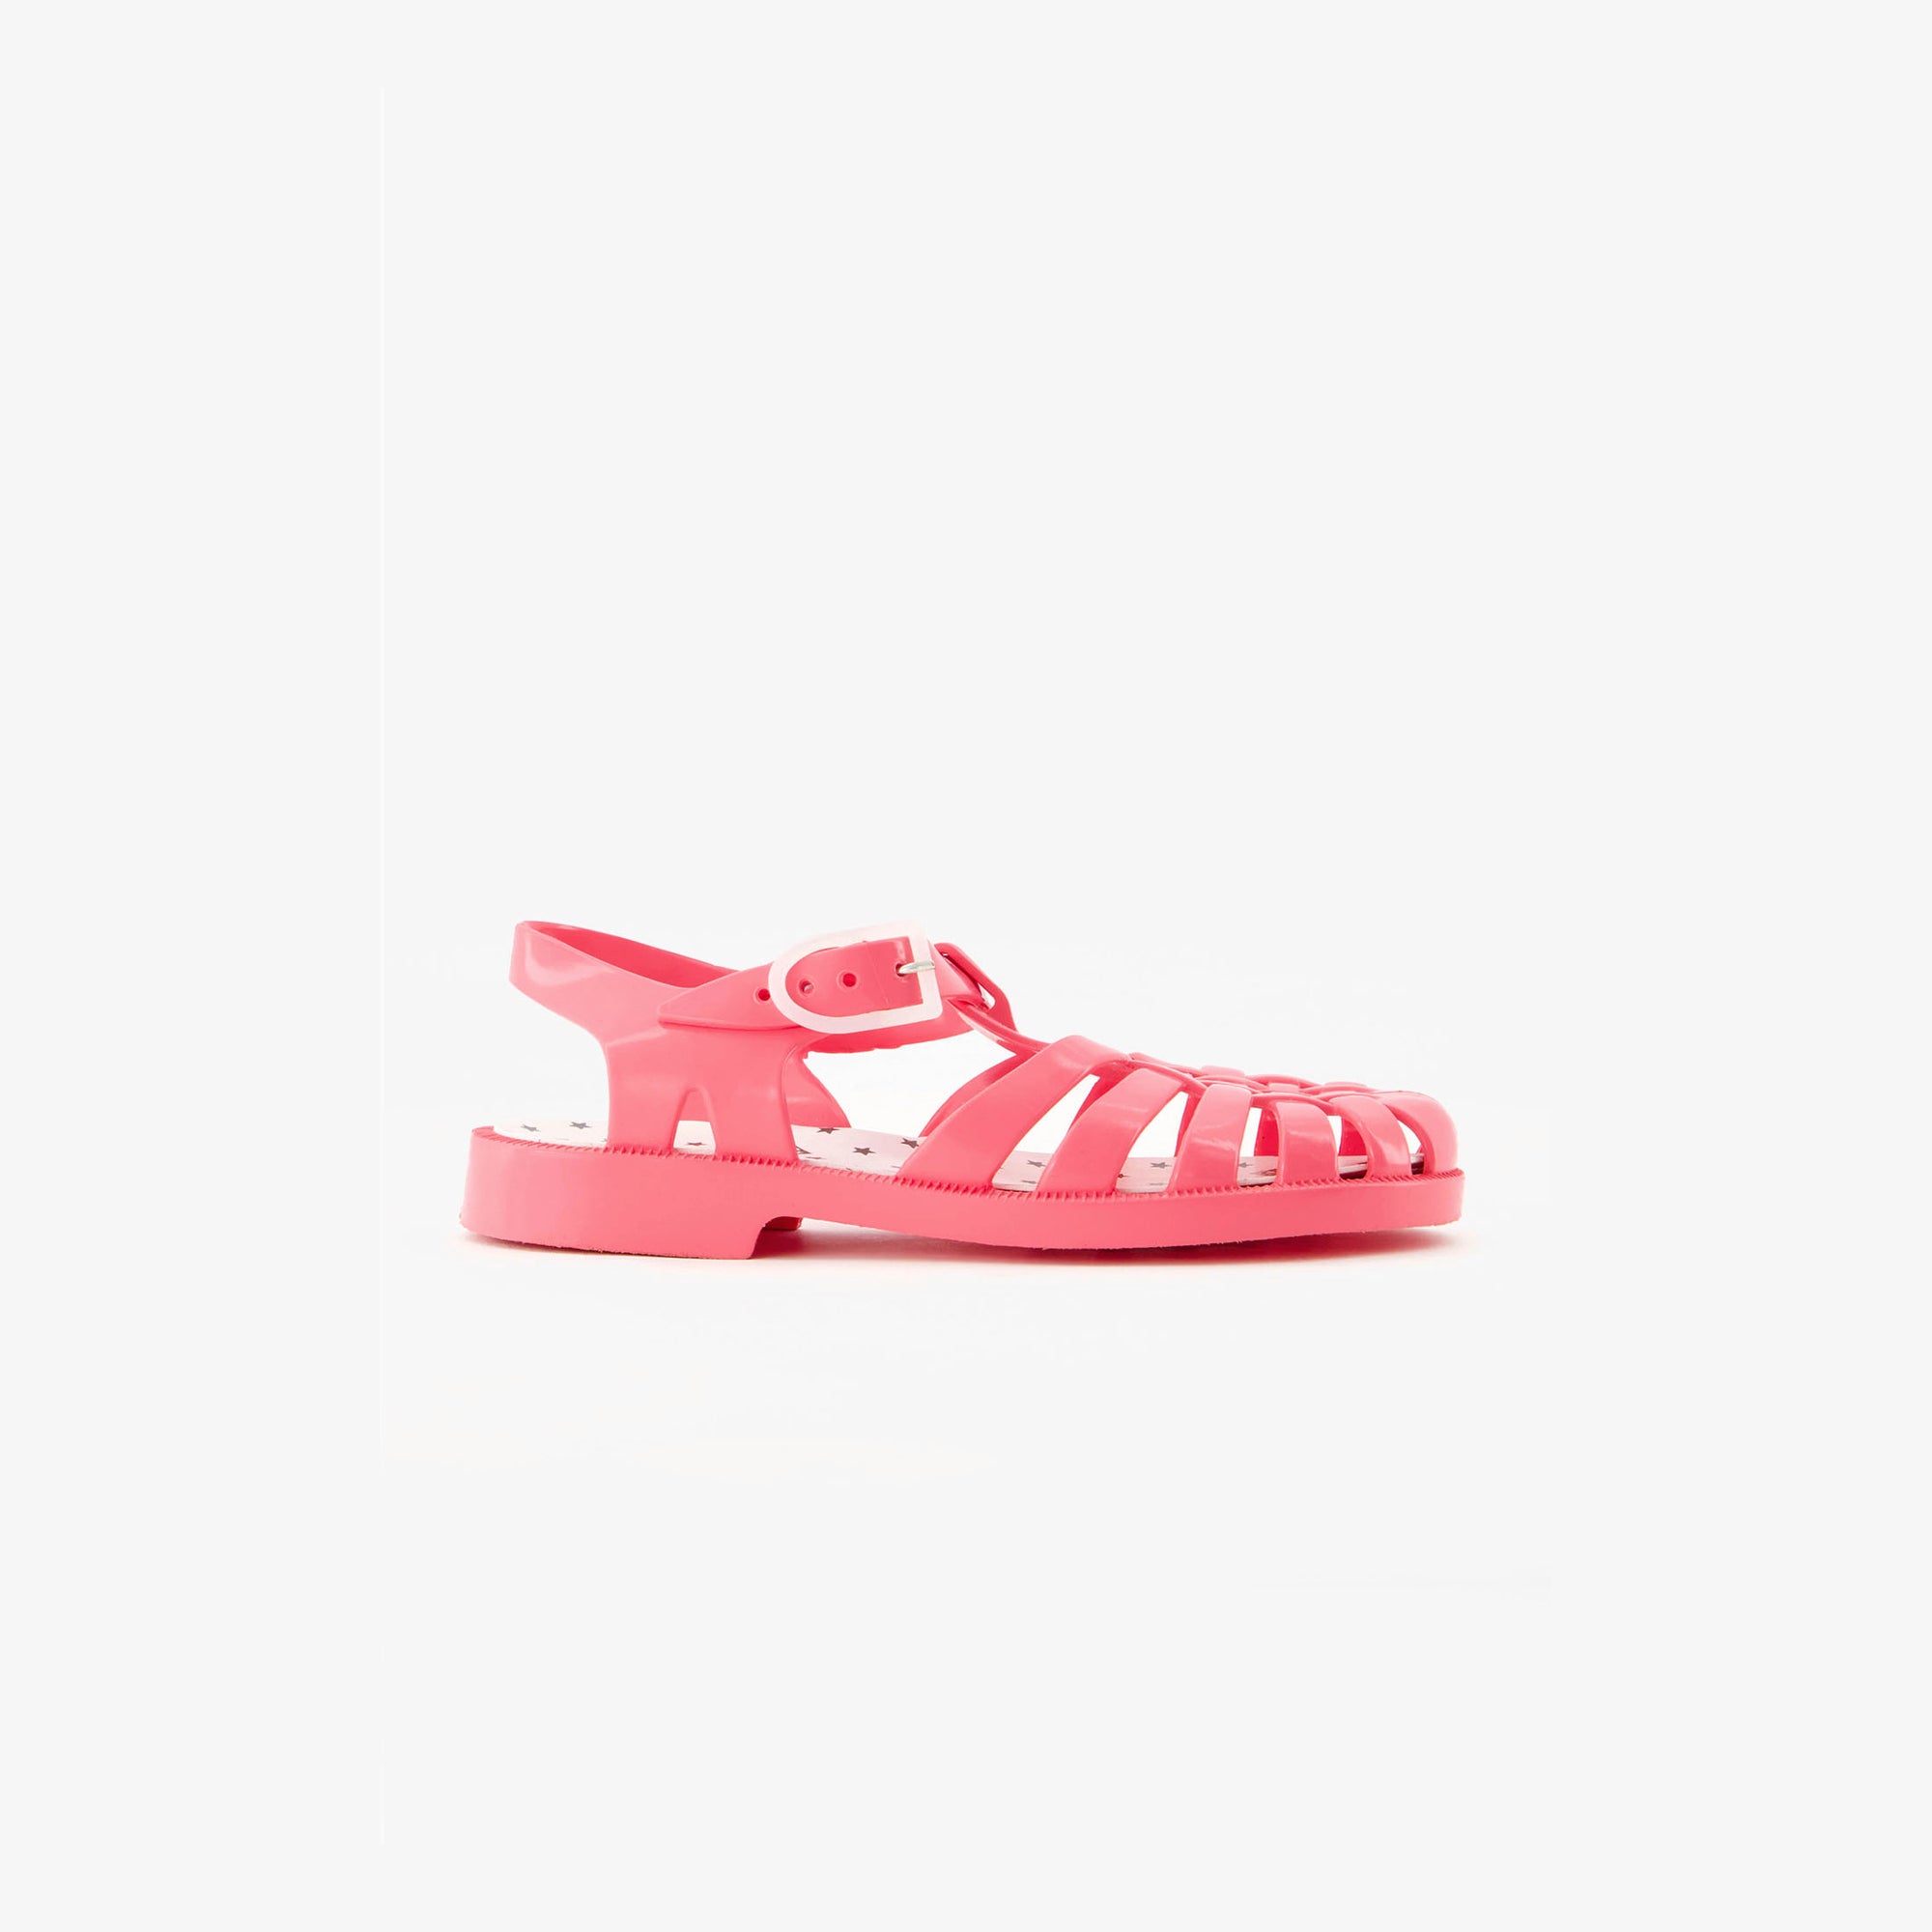 Boys & Girls Pink Sandals